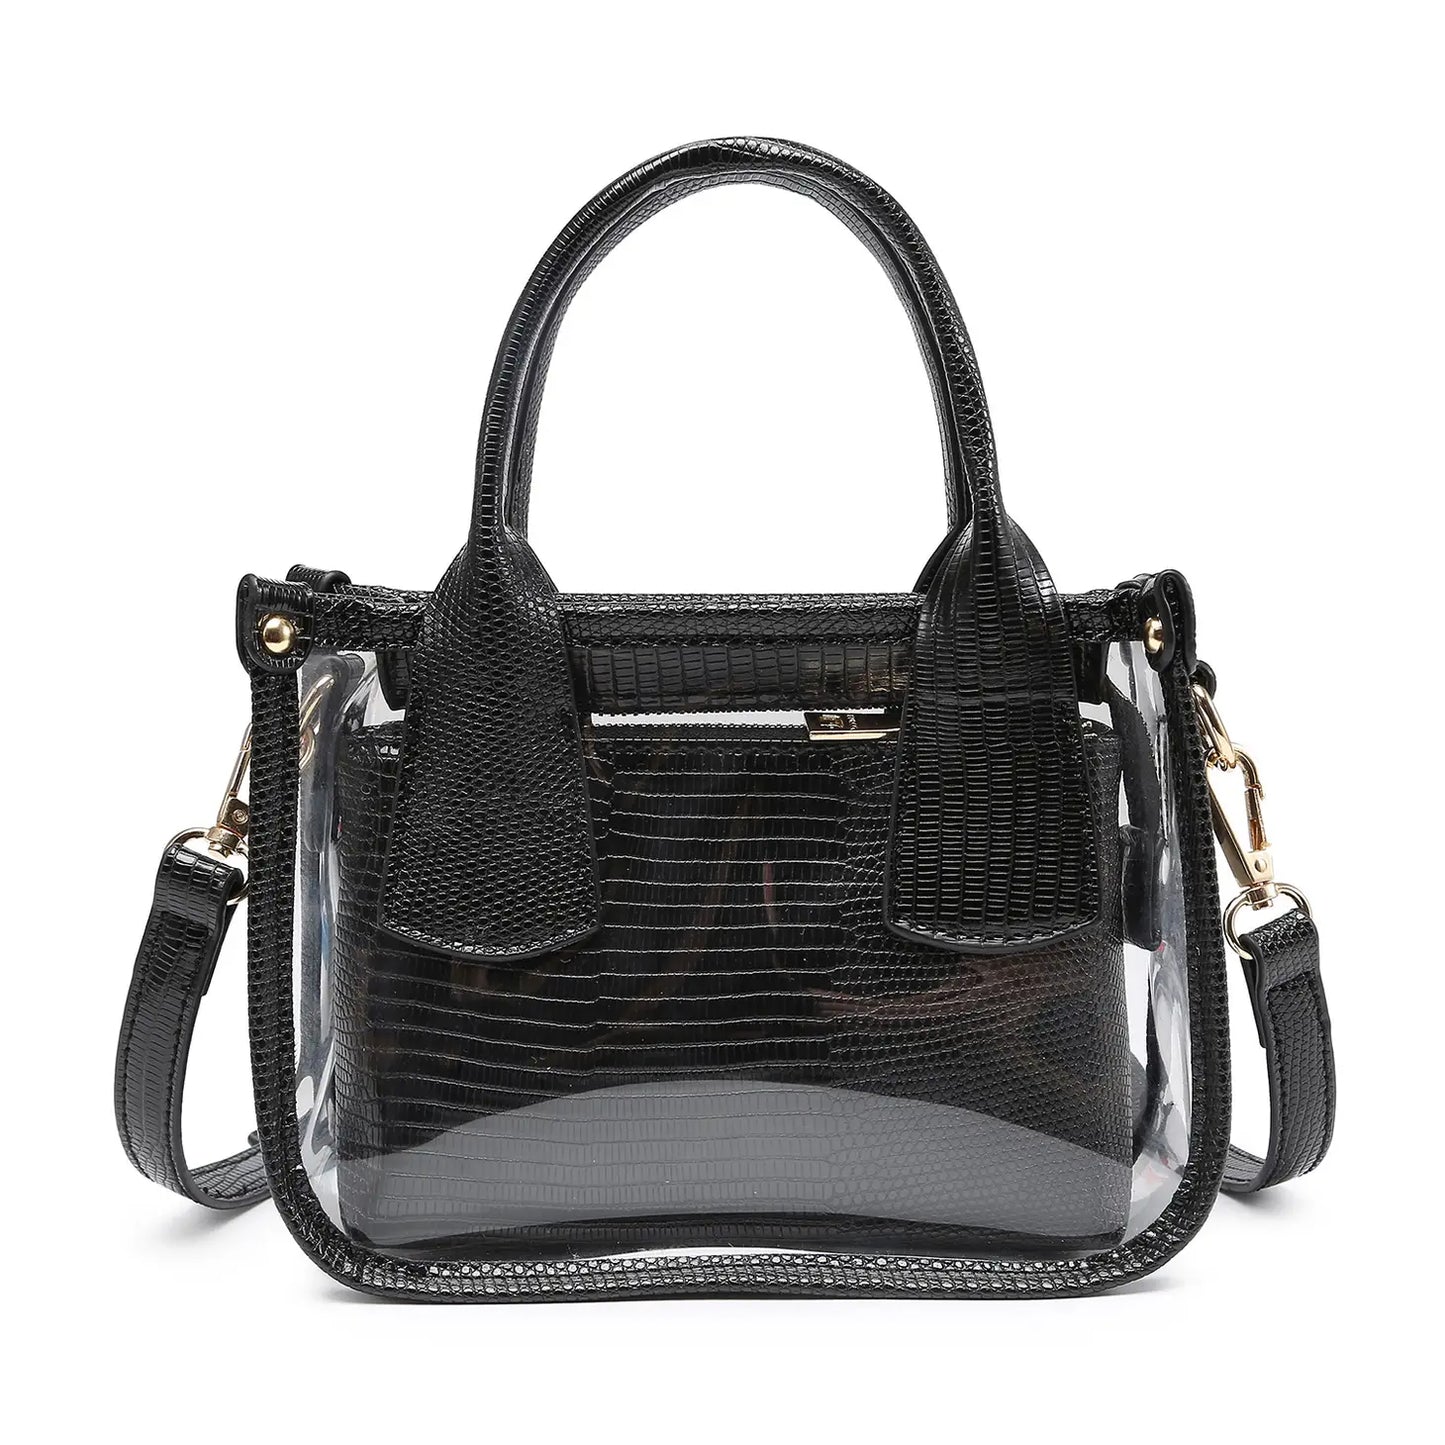 Stacey Clear Handbag - Black